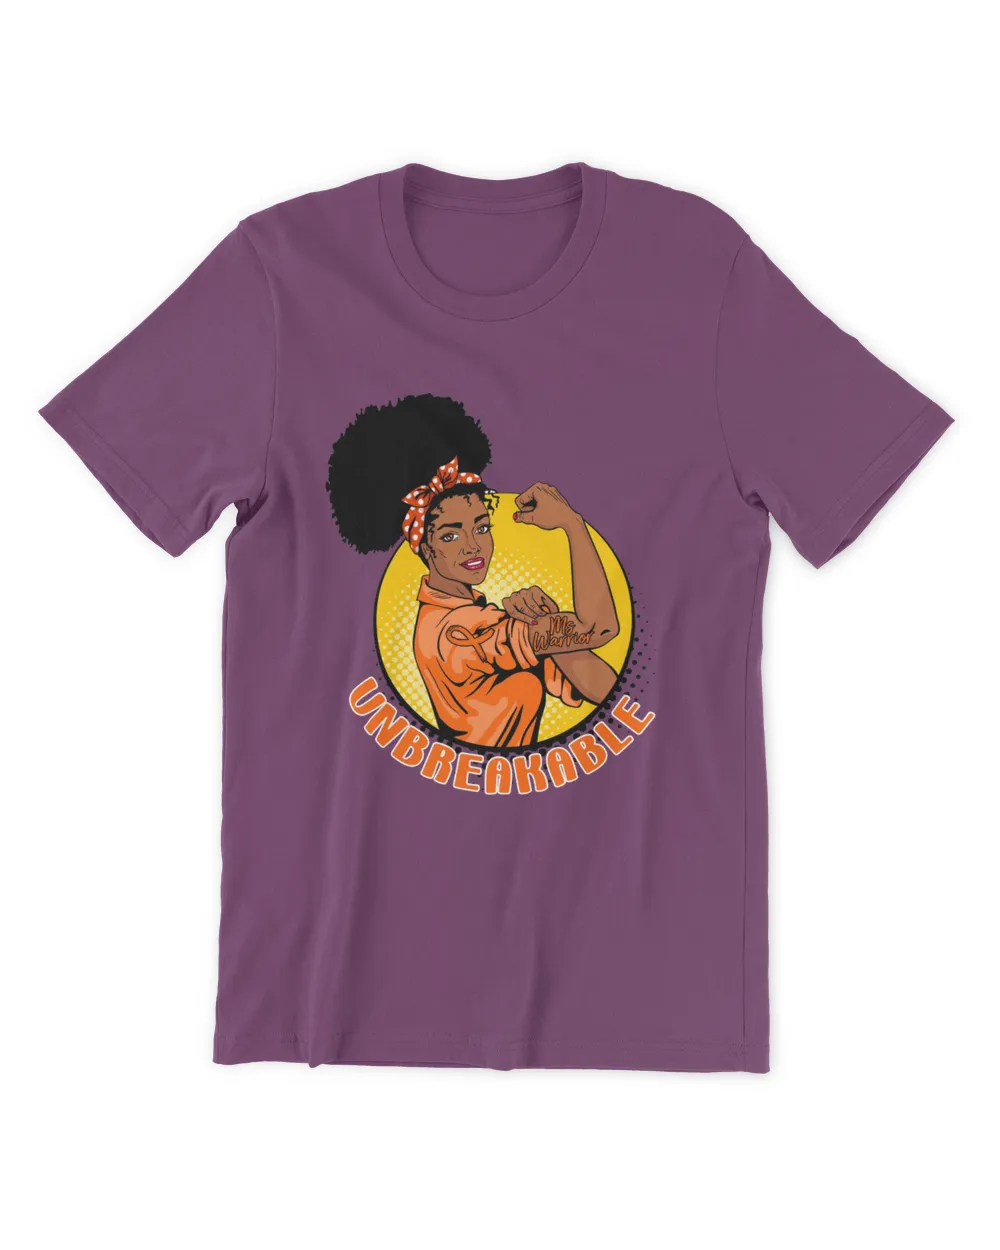 RD Ms Warrior Unbreakable Shirt, Multiple Sclerosis Awareness, Black Women MS Shirt, Multiple Sclerosis T-Shirt